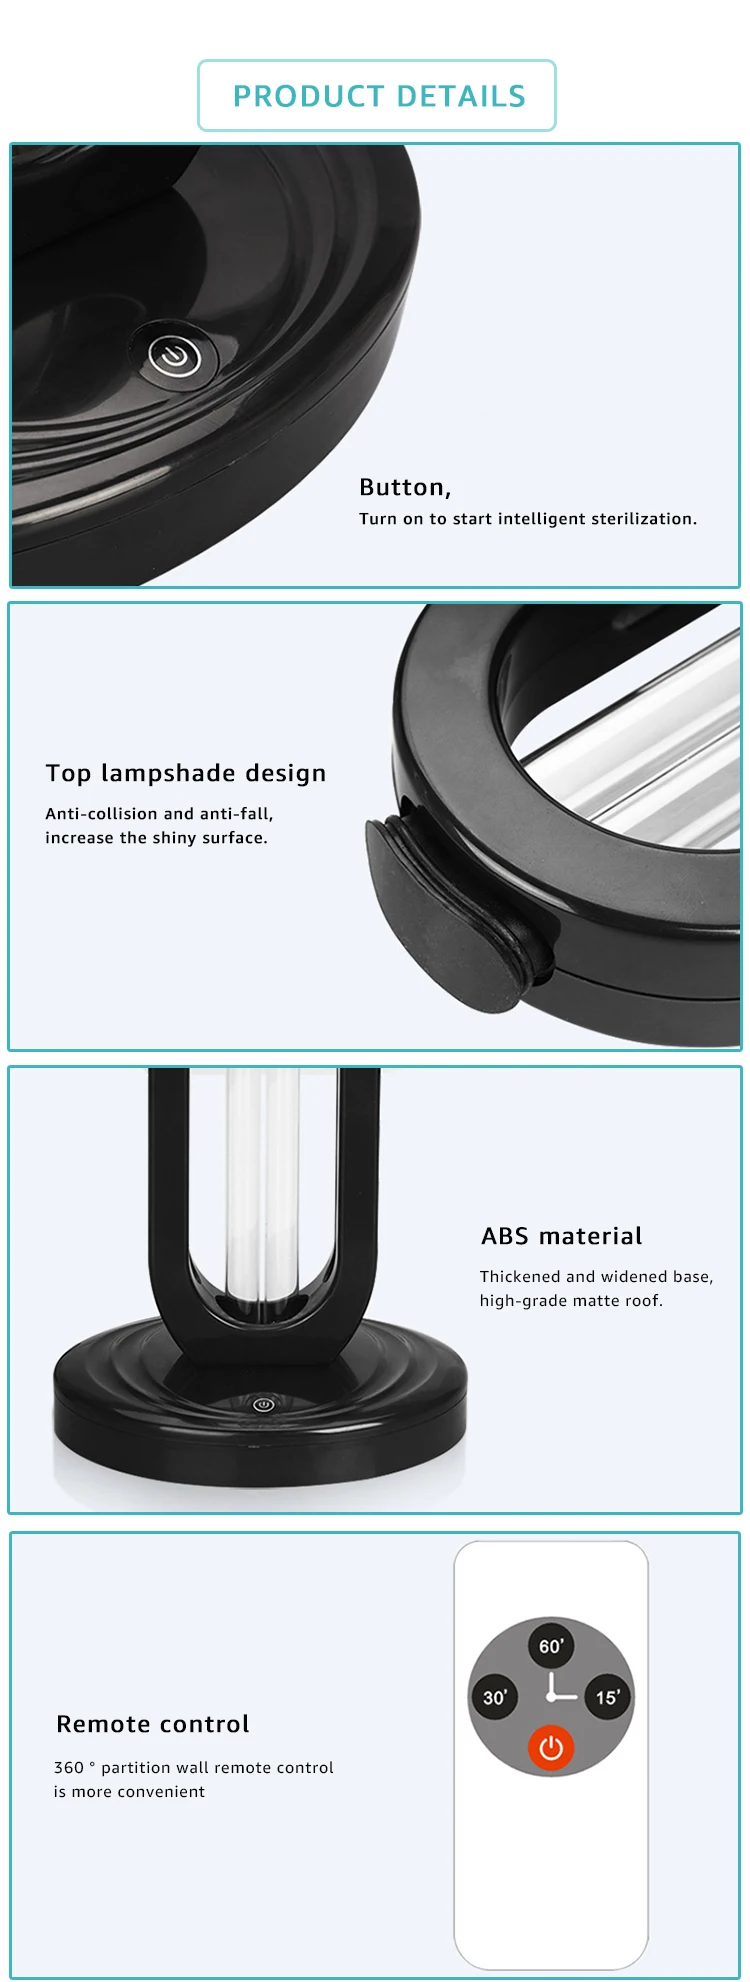 New UV Germicidal lamp UV light 36w UV Sterilizer lamp for Office Home Store